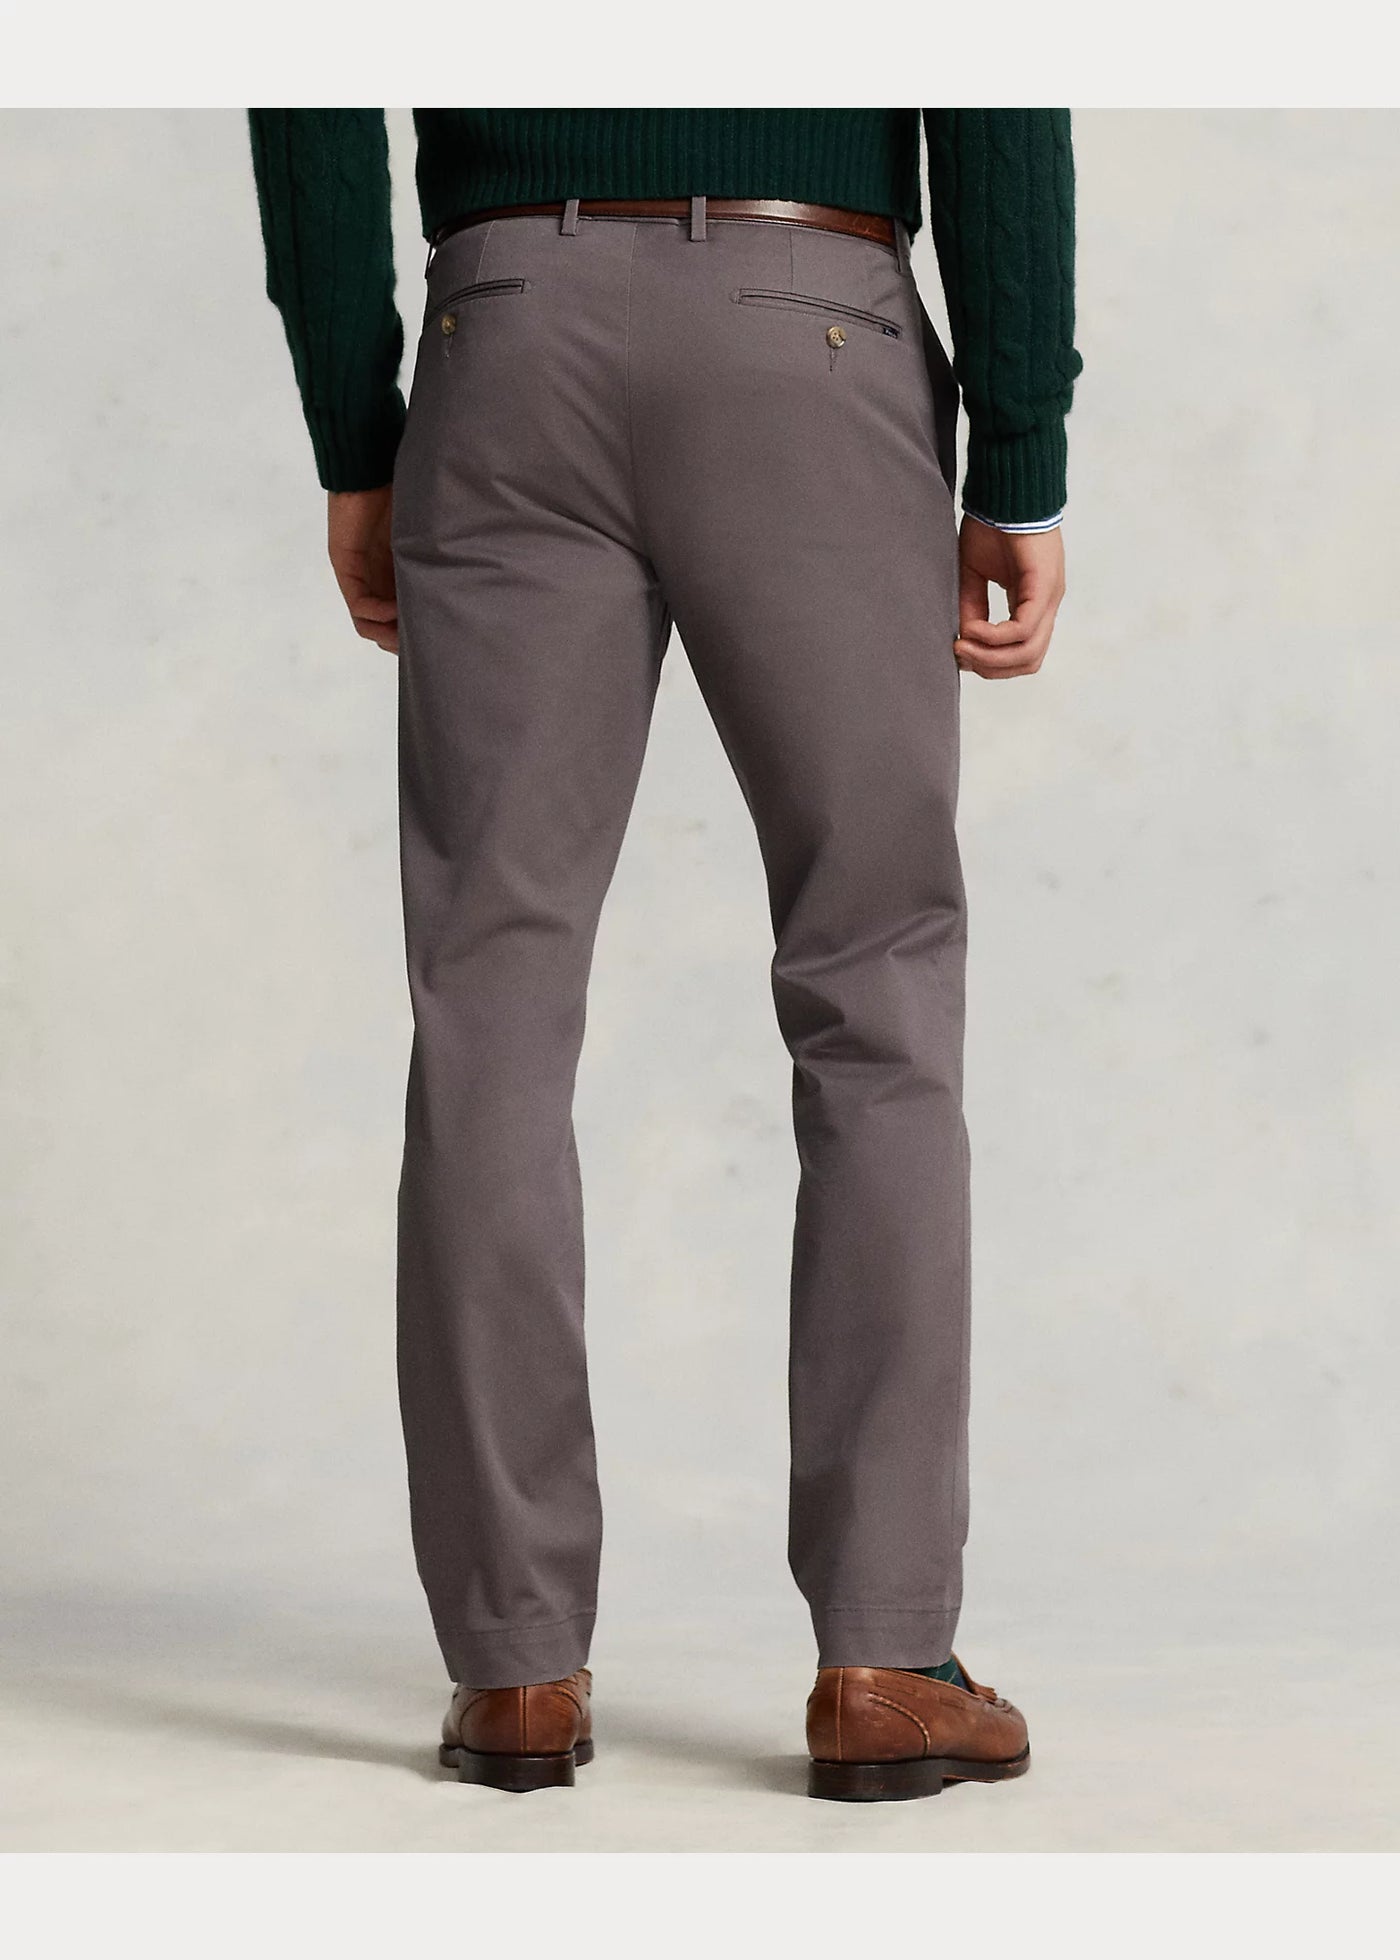 Ralph Lauren Stretch Slim Fit Chino Trouser | Grey